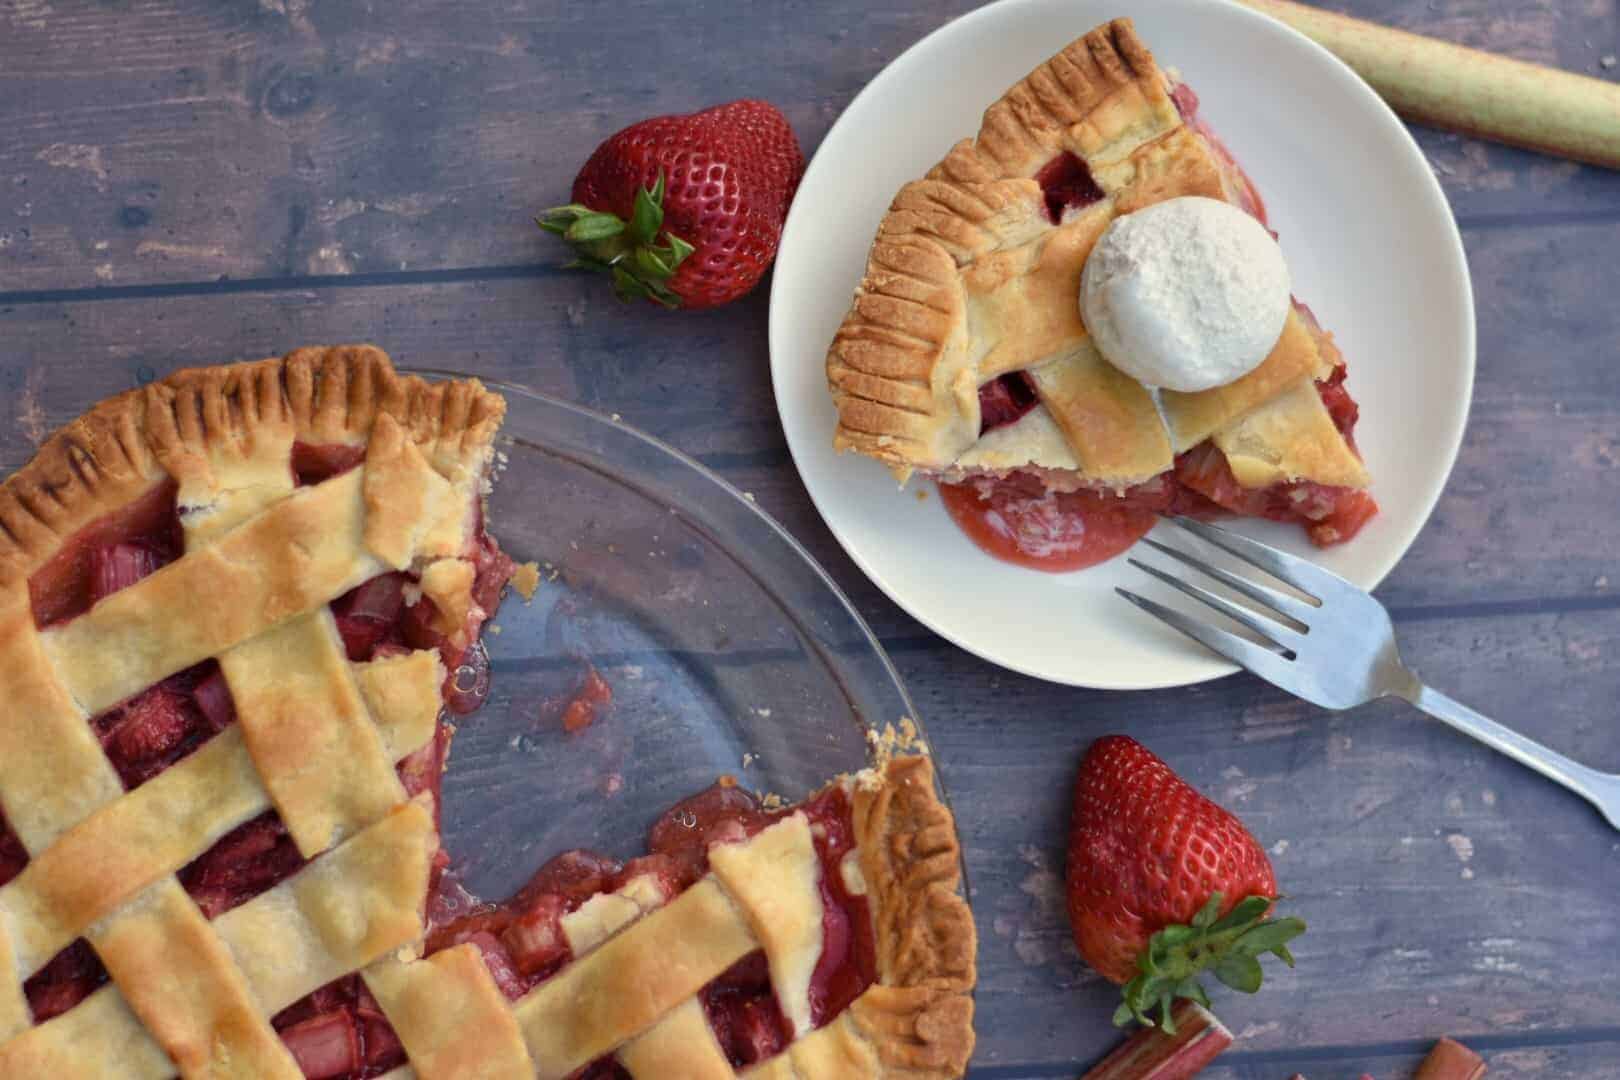 slice of strawberry rhubarb pie with ice cream